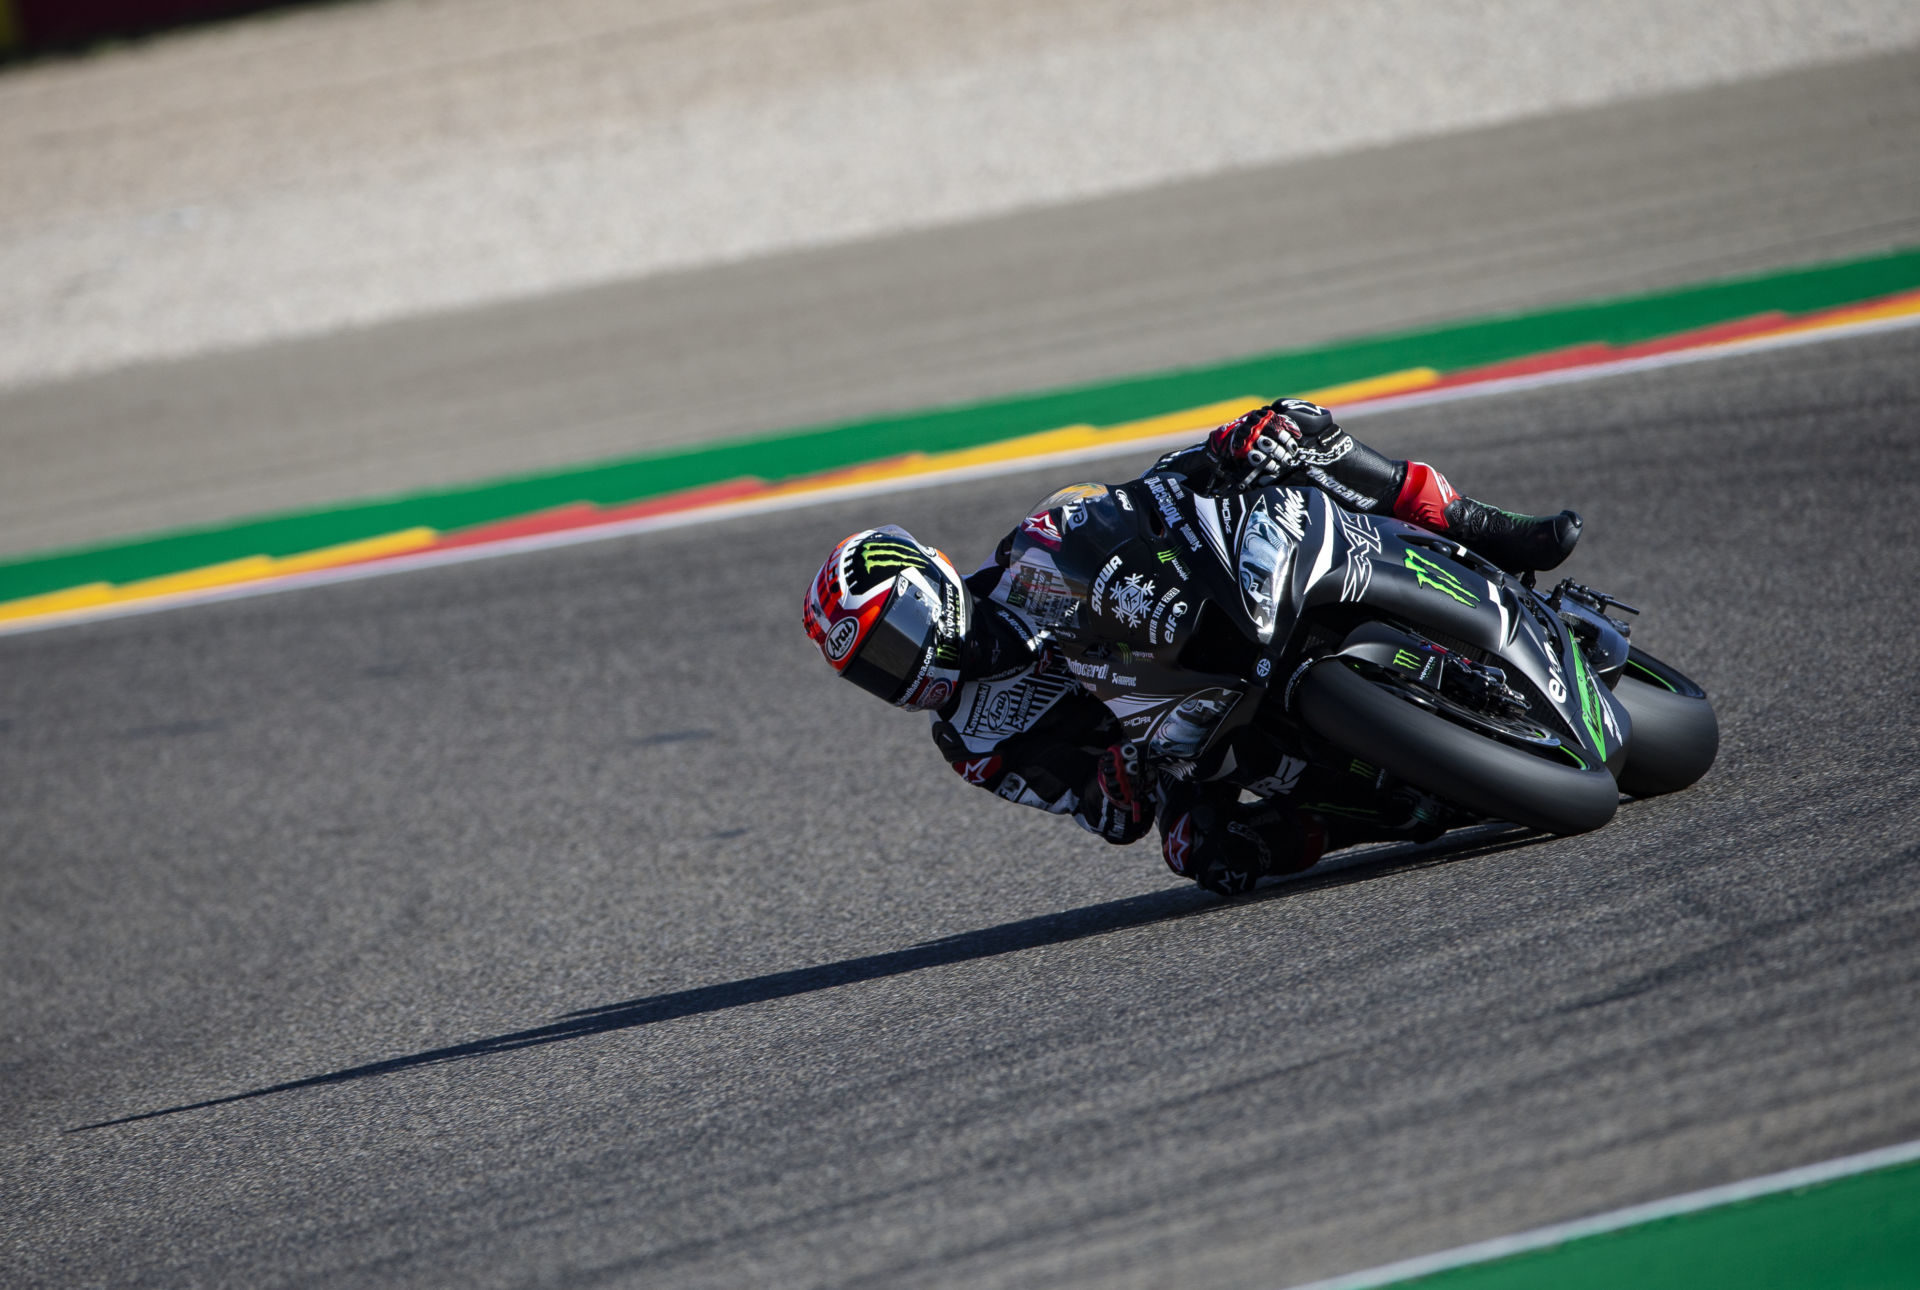 Jonathan Rea in action in Spain. Photo courtesy of Kawasaki Motors Europe.